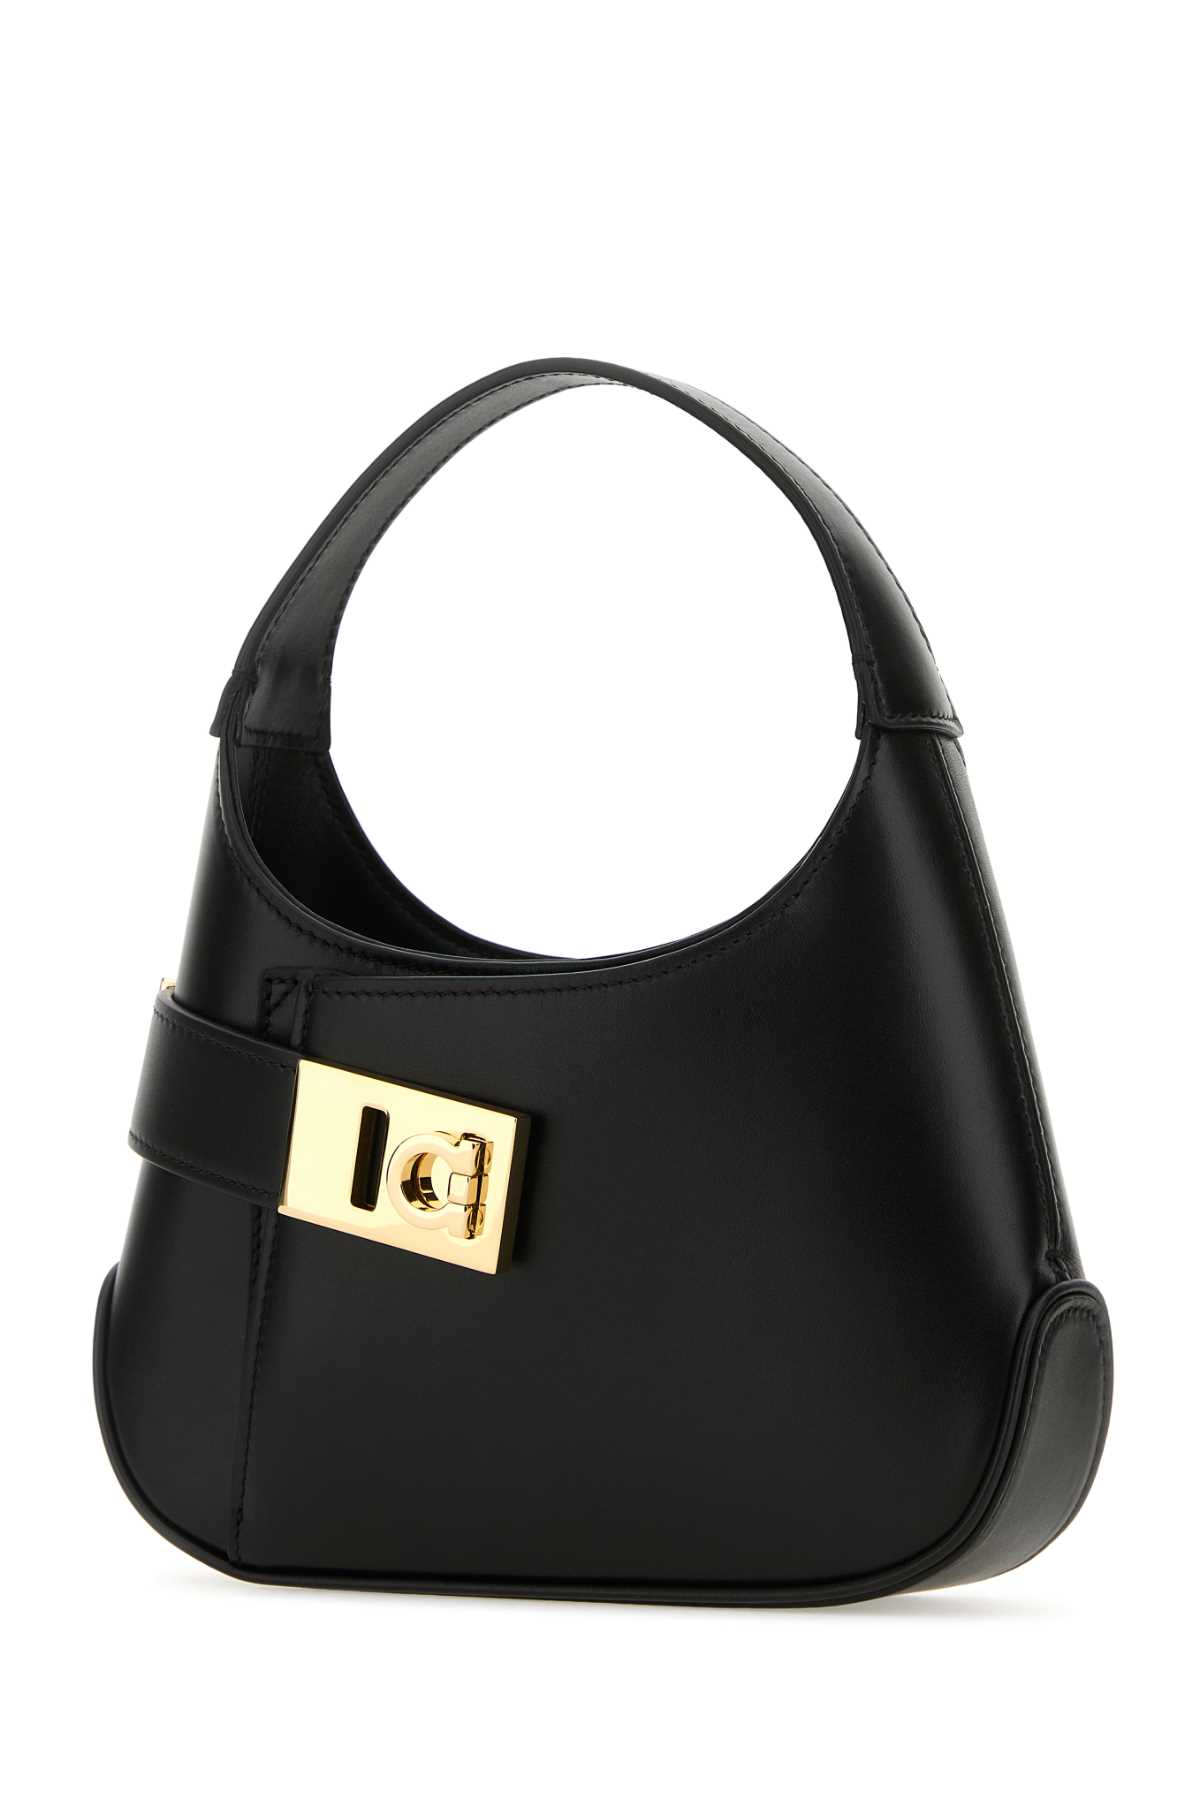 Ferragamo Black Leather Hobo Mini Handbag In Neronero